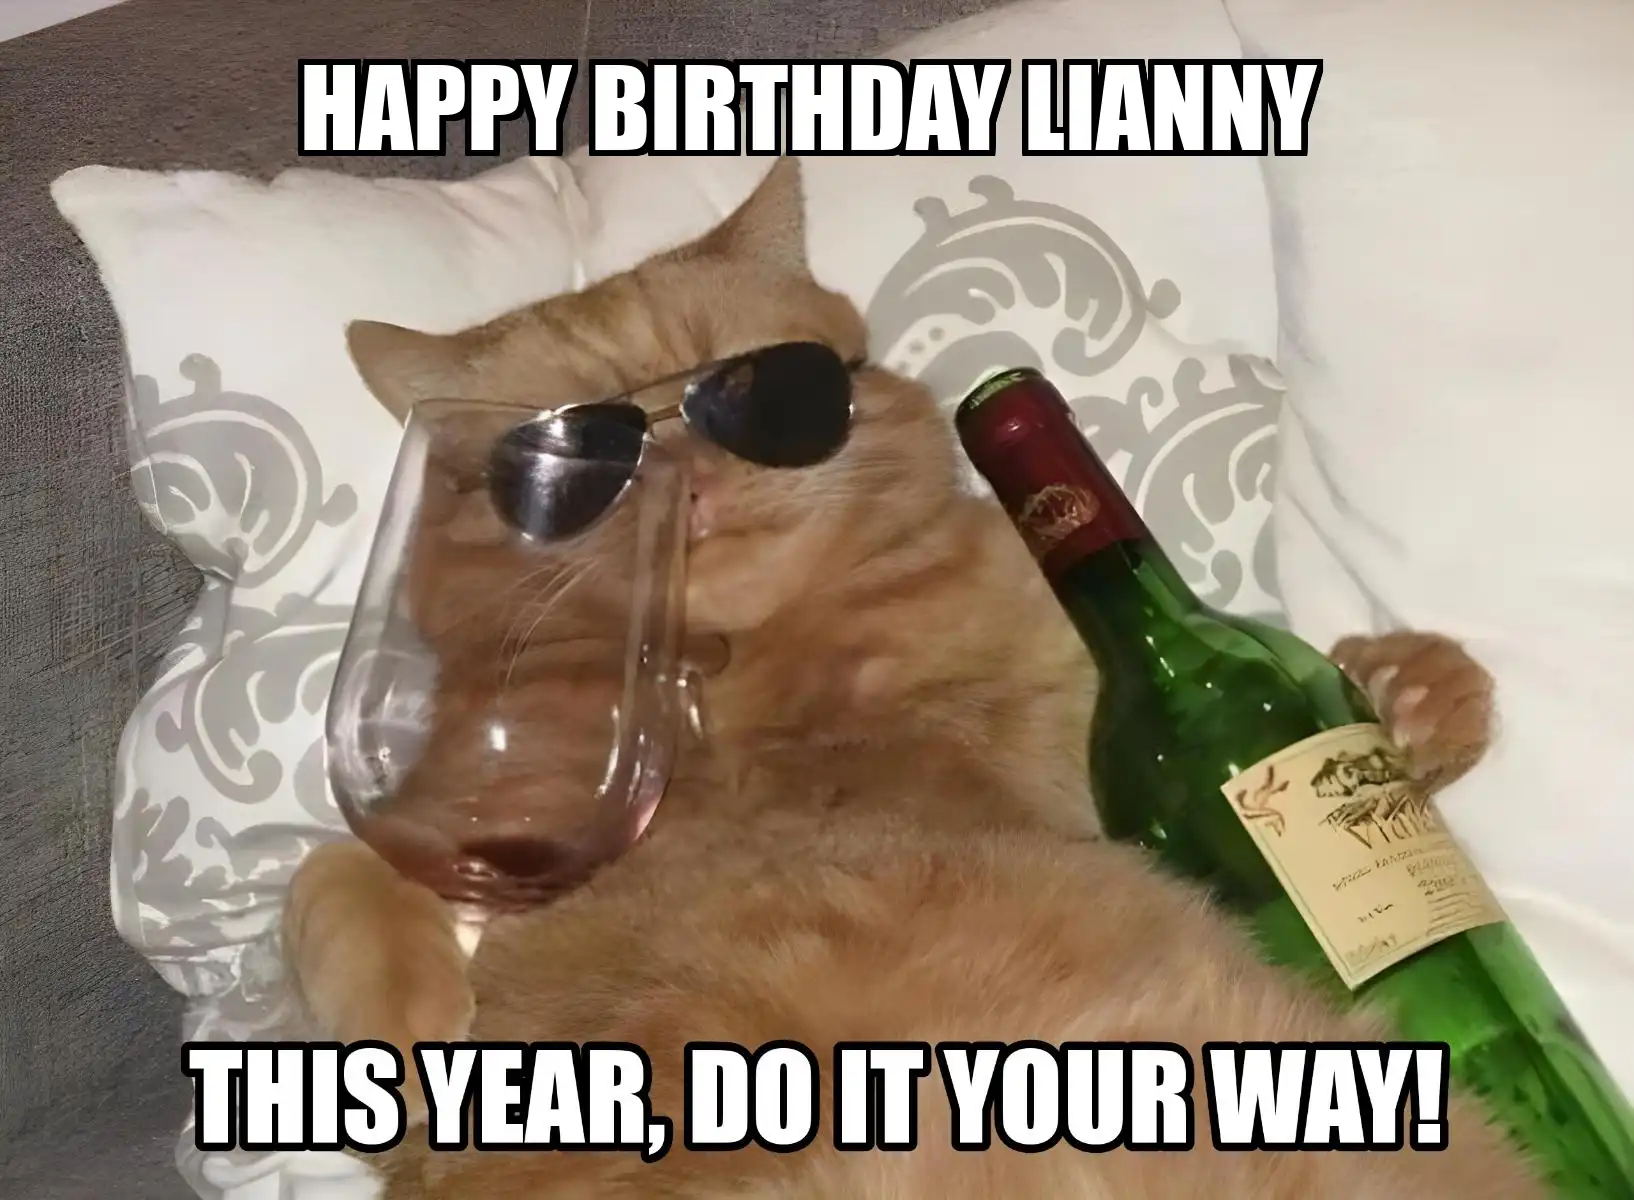 Happy Birthday Lianny This Year Do It Your Way Meme